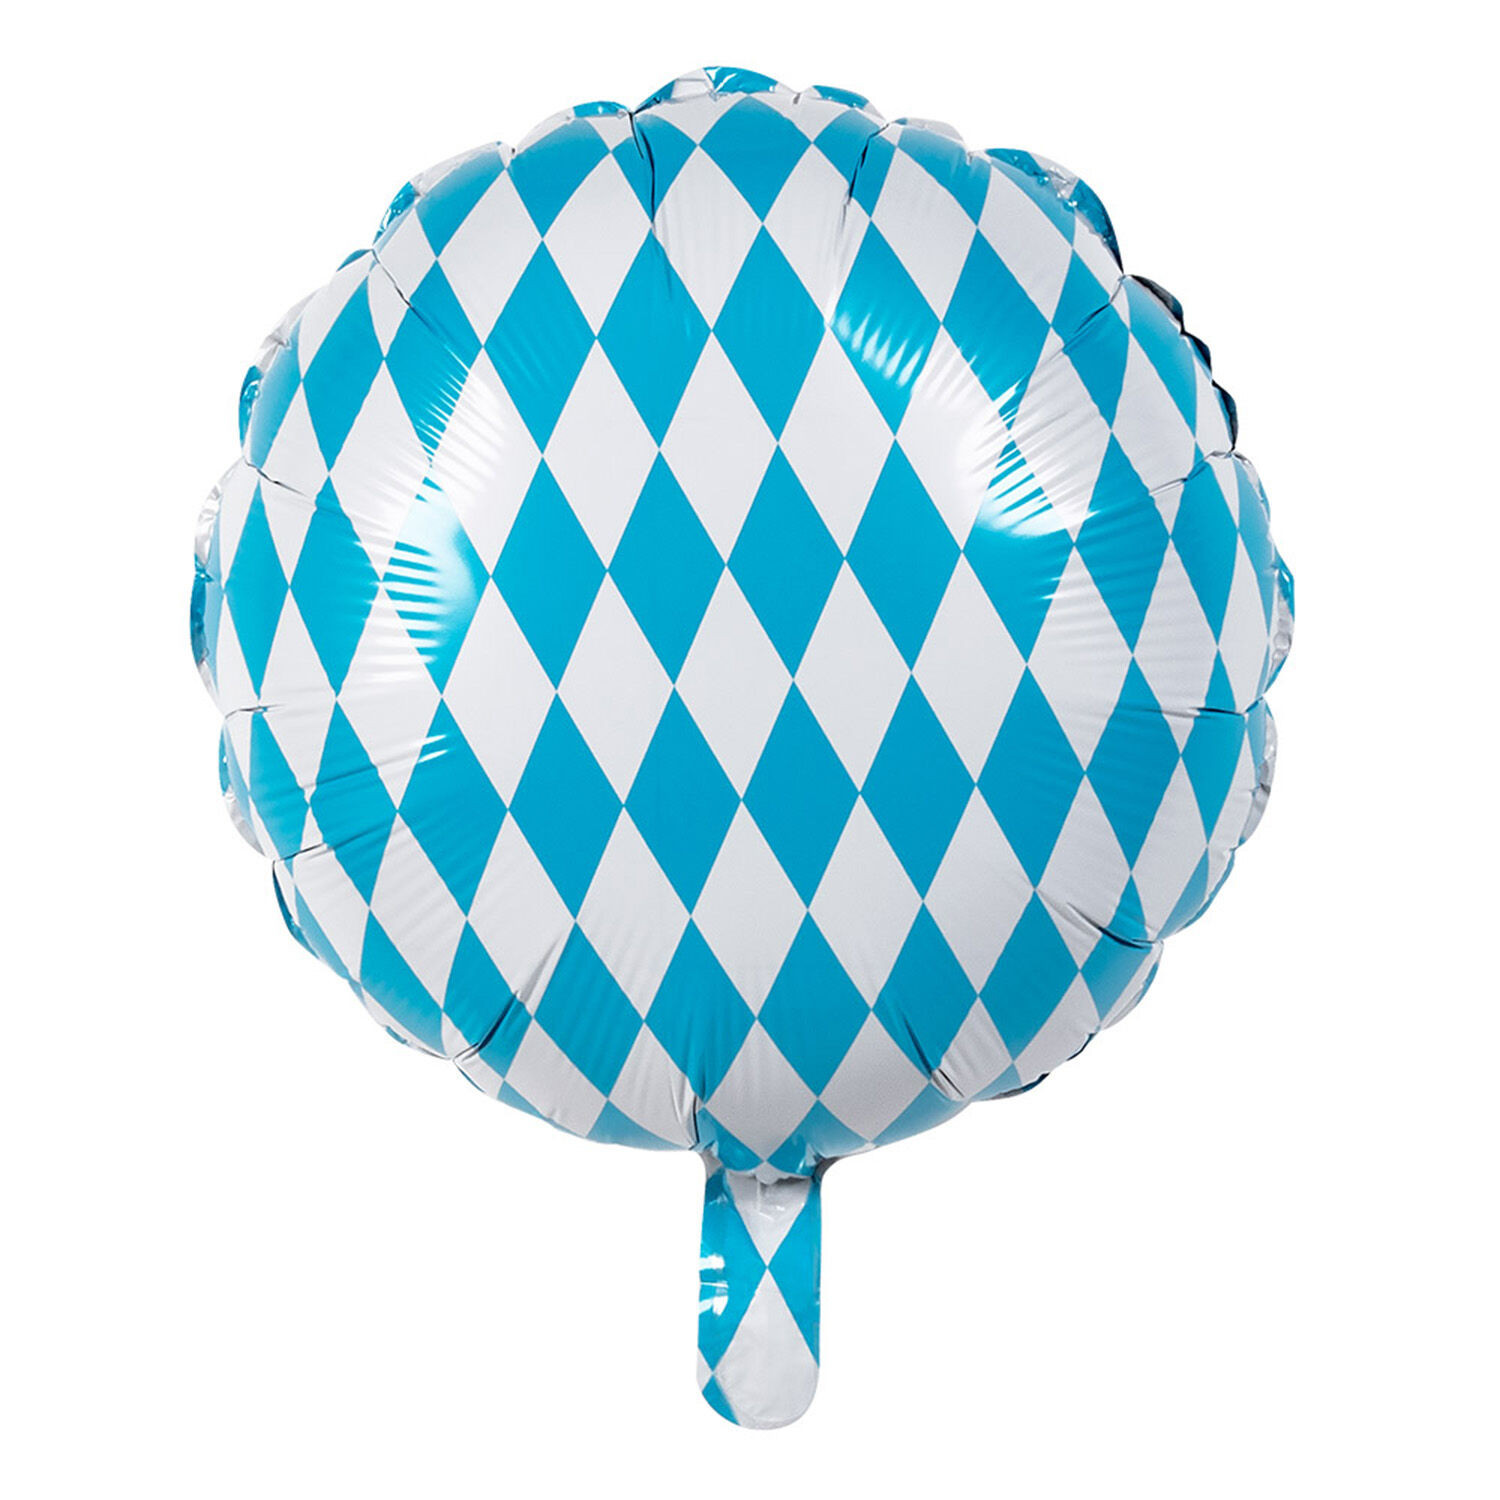 NEU Folienballon Bayern, ca. 45cm mit bayrischer Raute